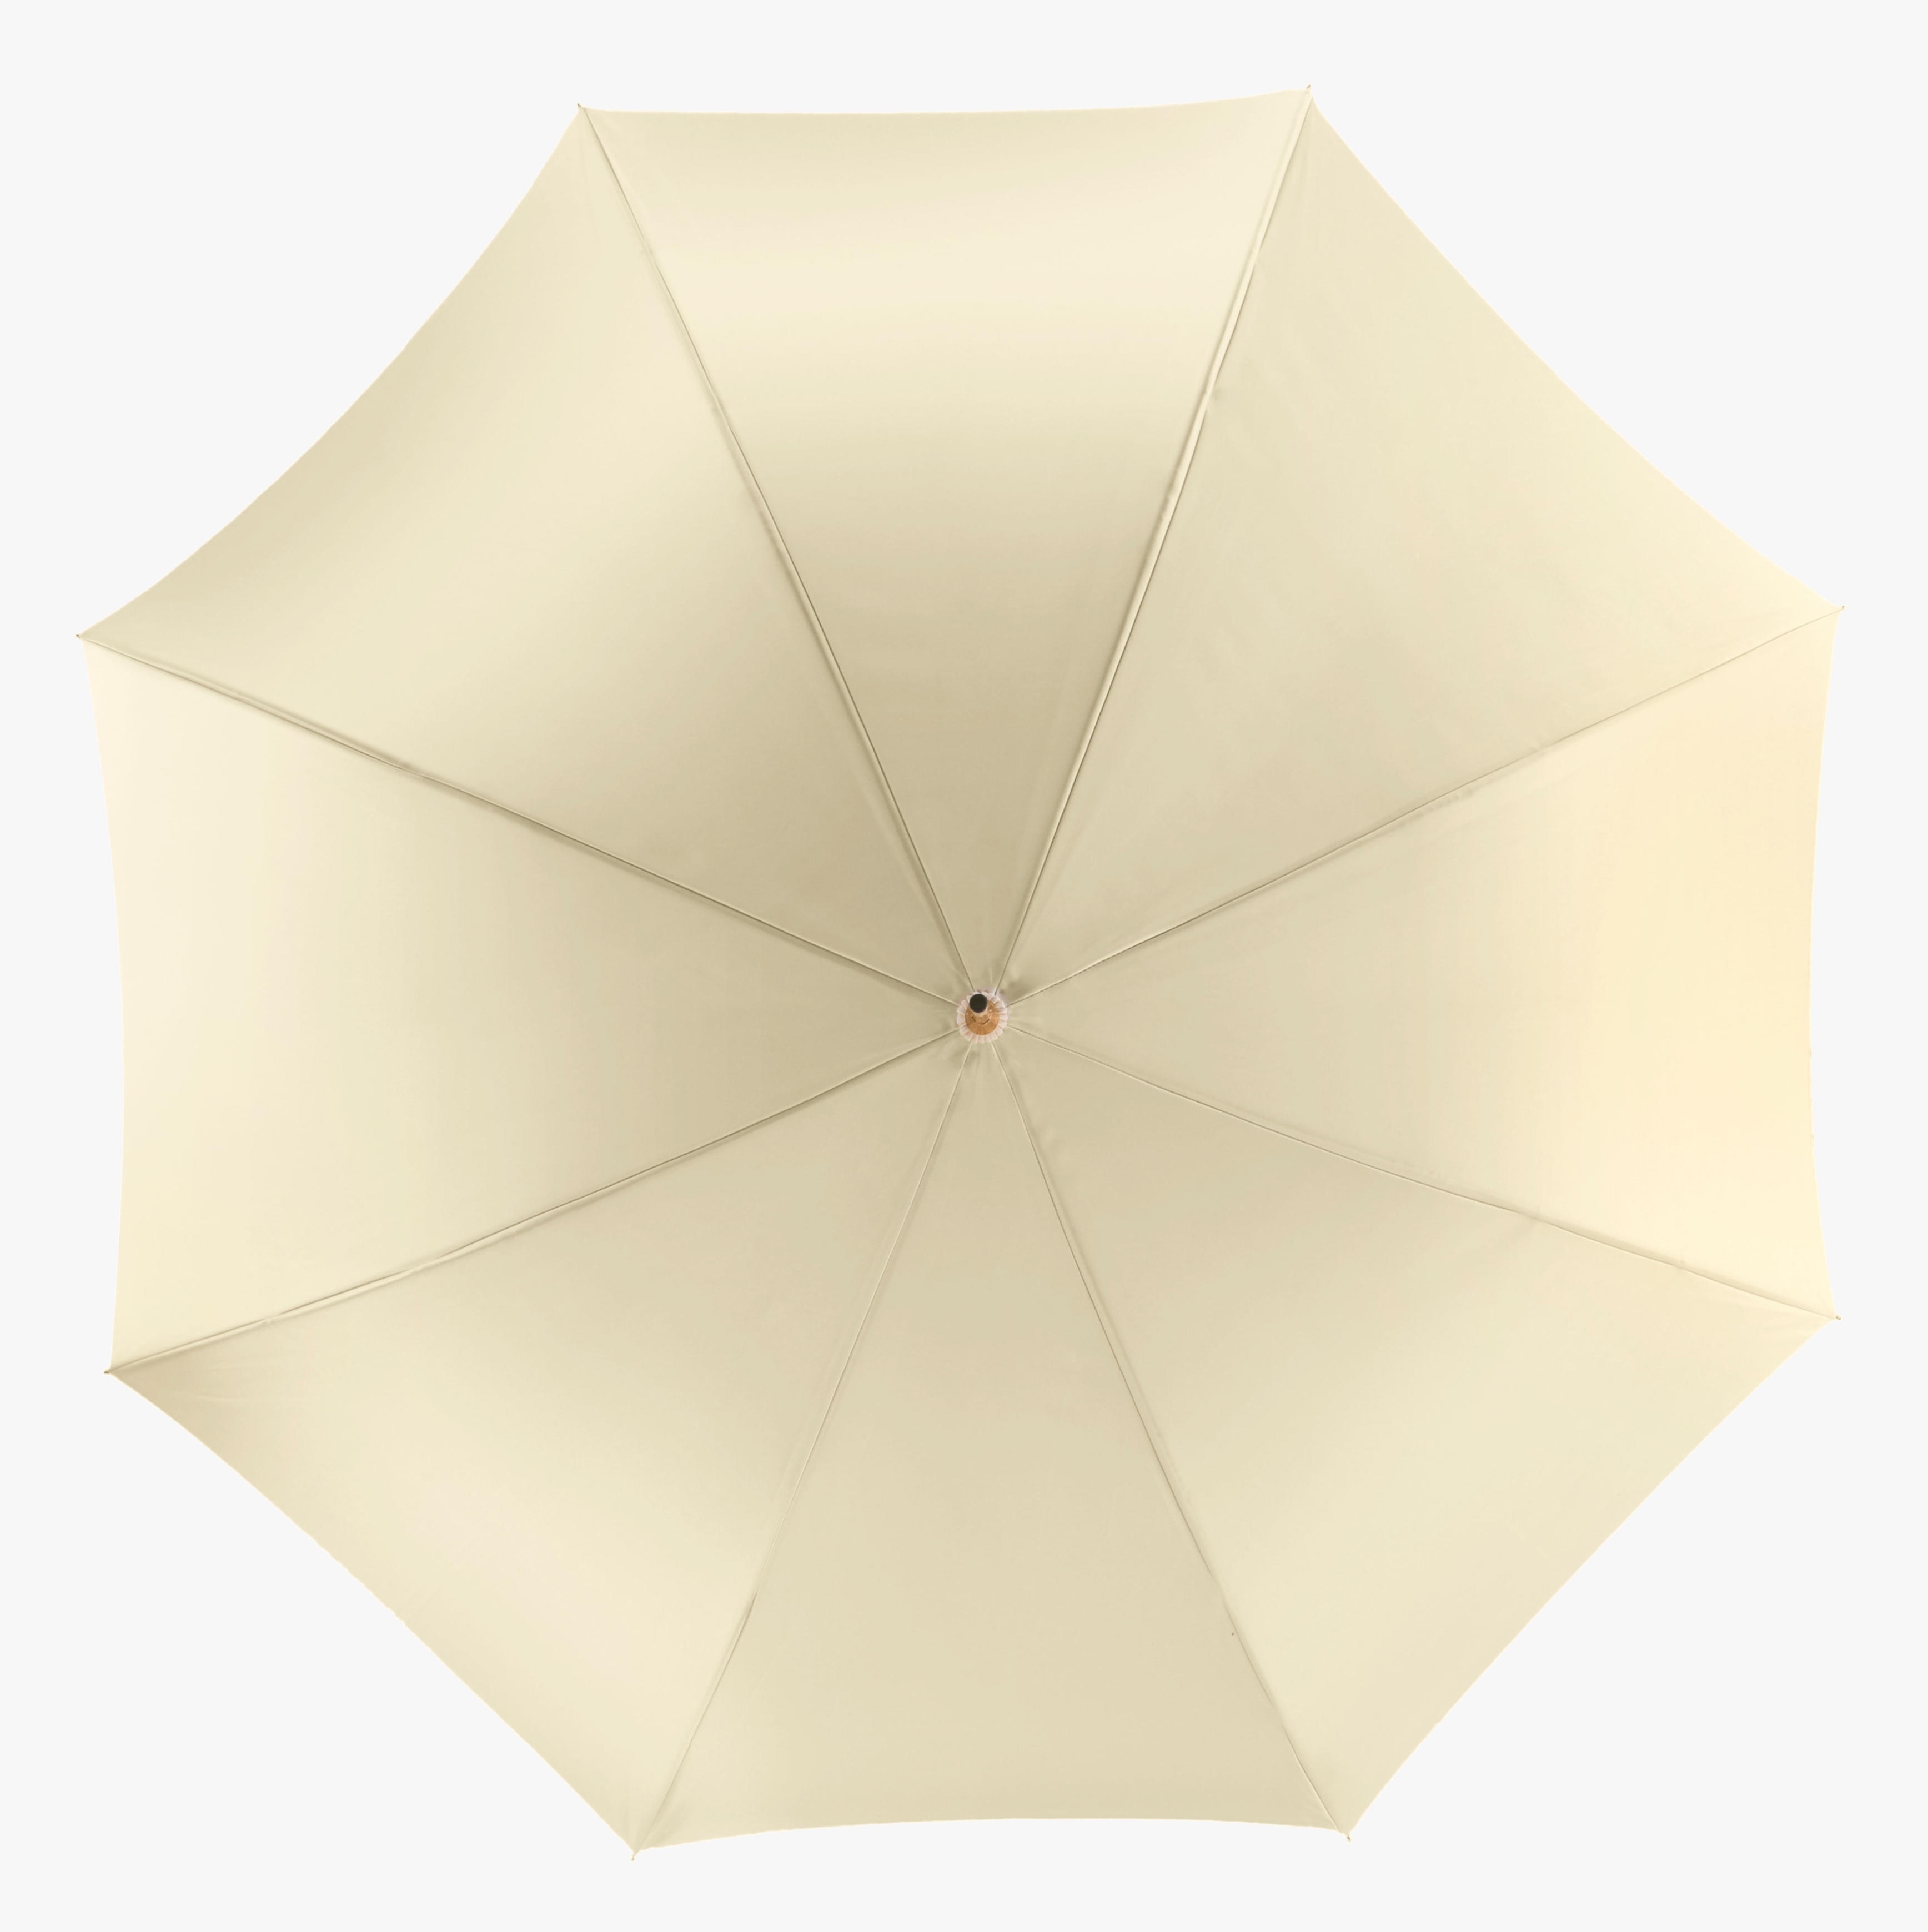 Brass tube 57-mia-long handle umbrella